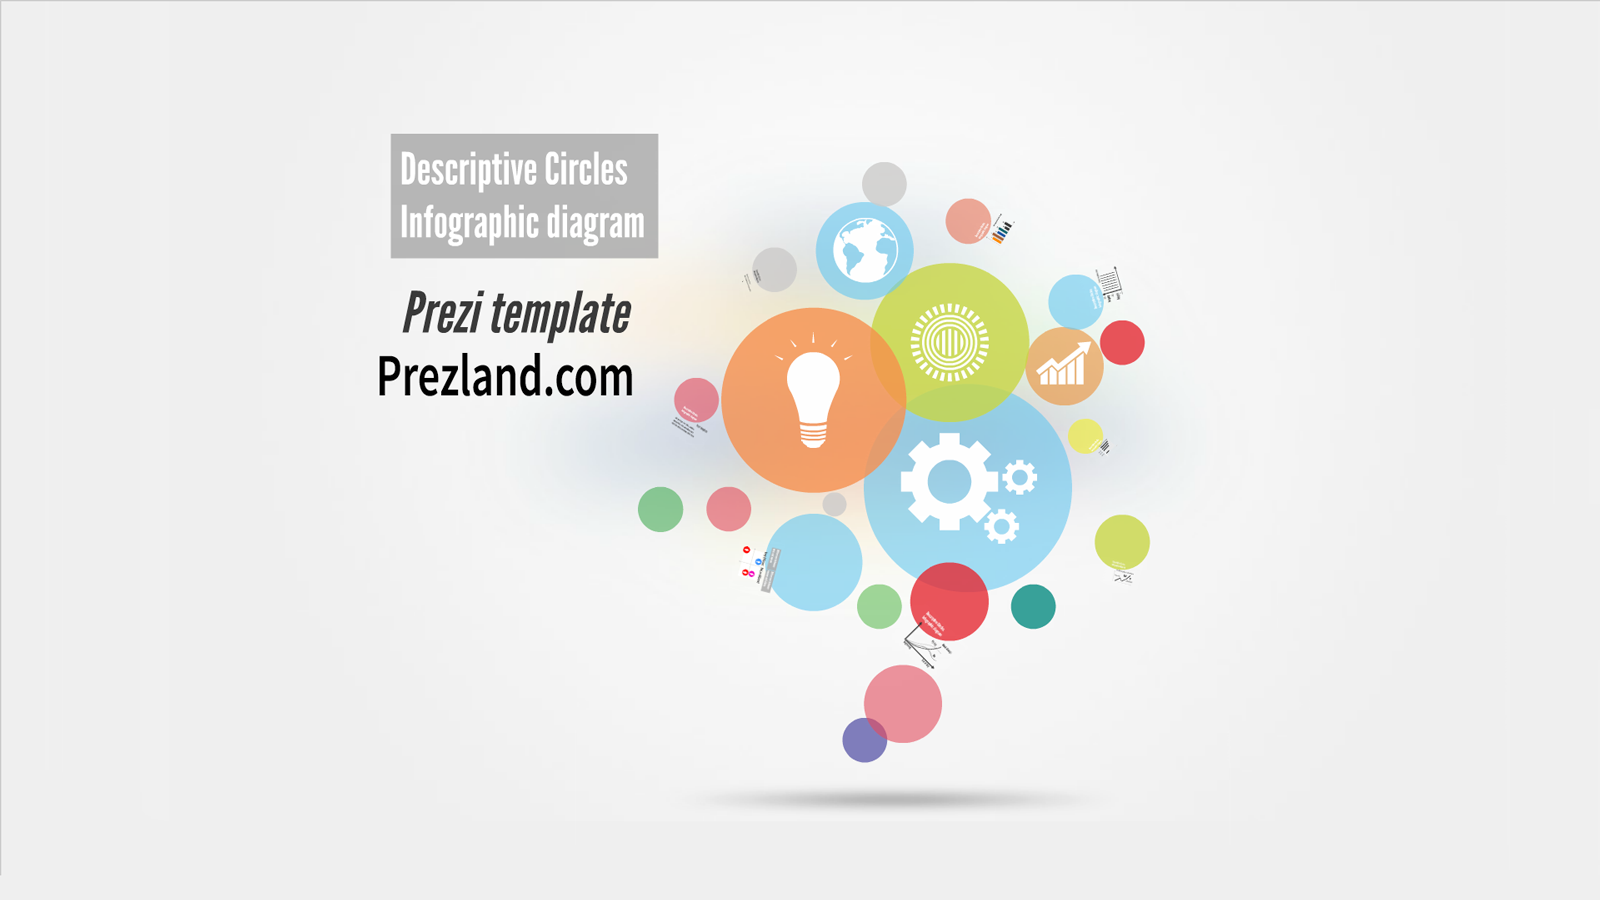 Descriptive Circles Prezi template